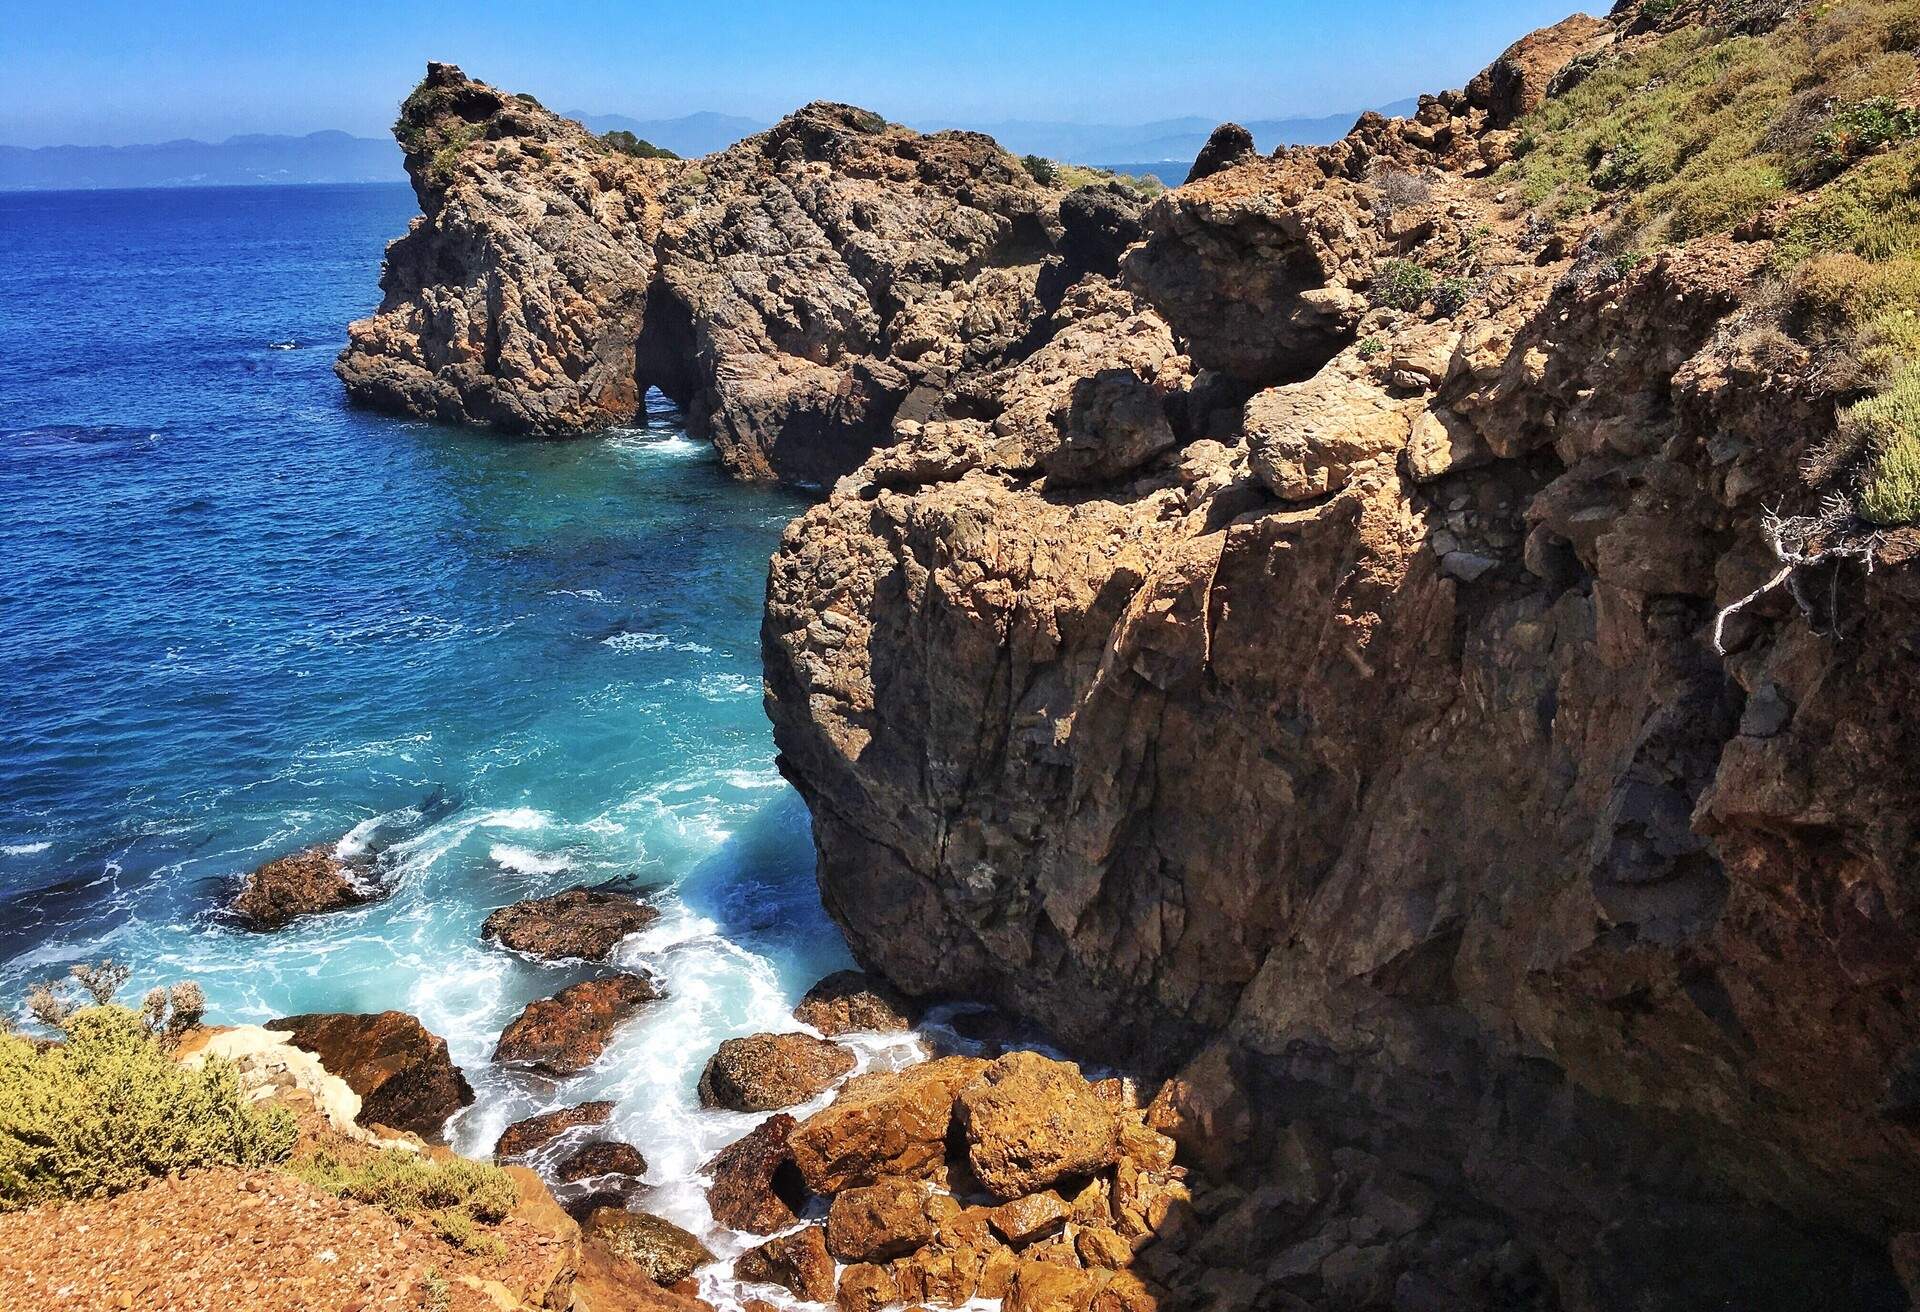 A rocky sea cliff with waves pounding on coastal rocks.